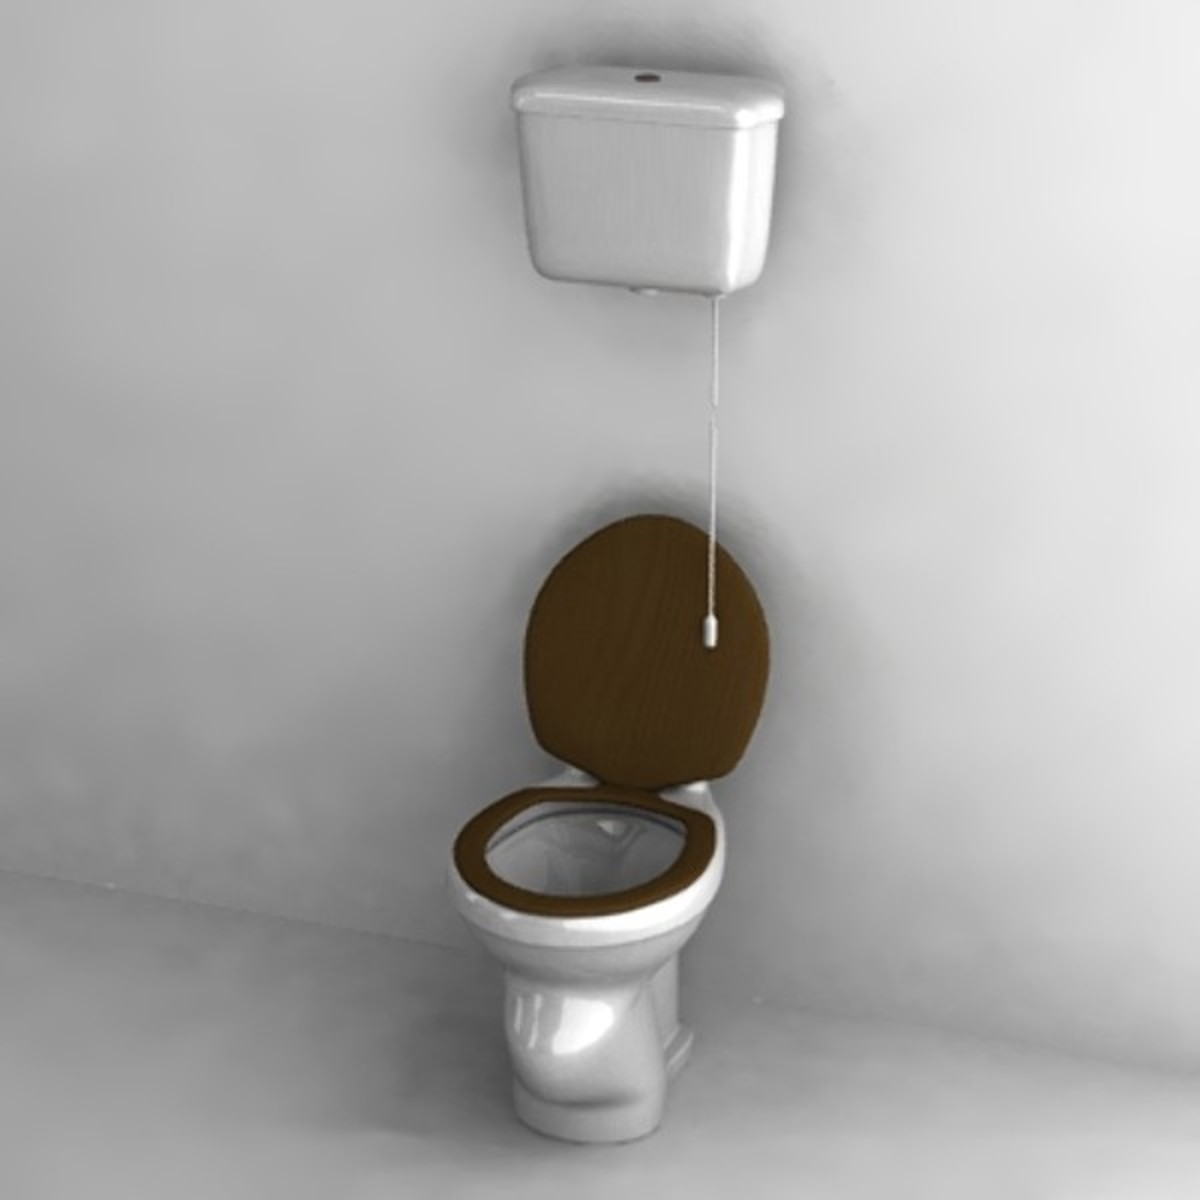 A typical Dutch toilet